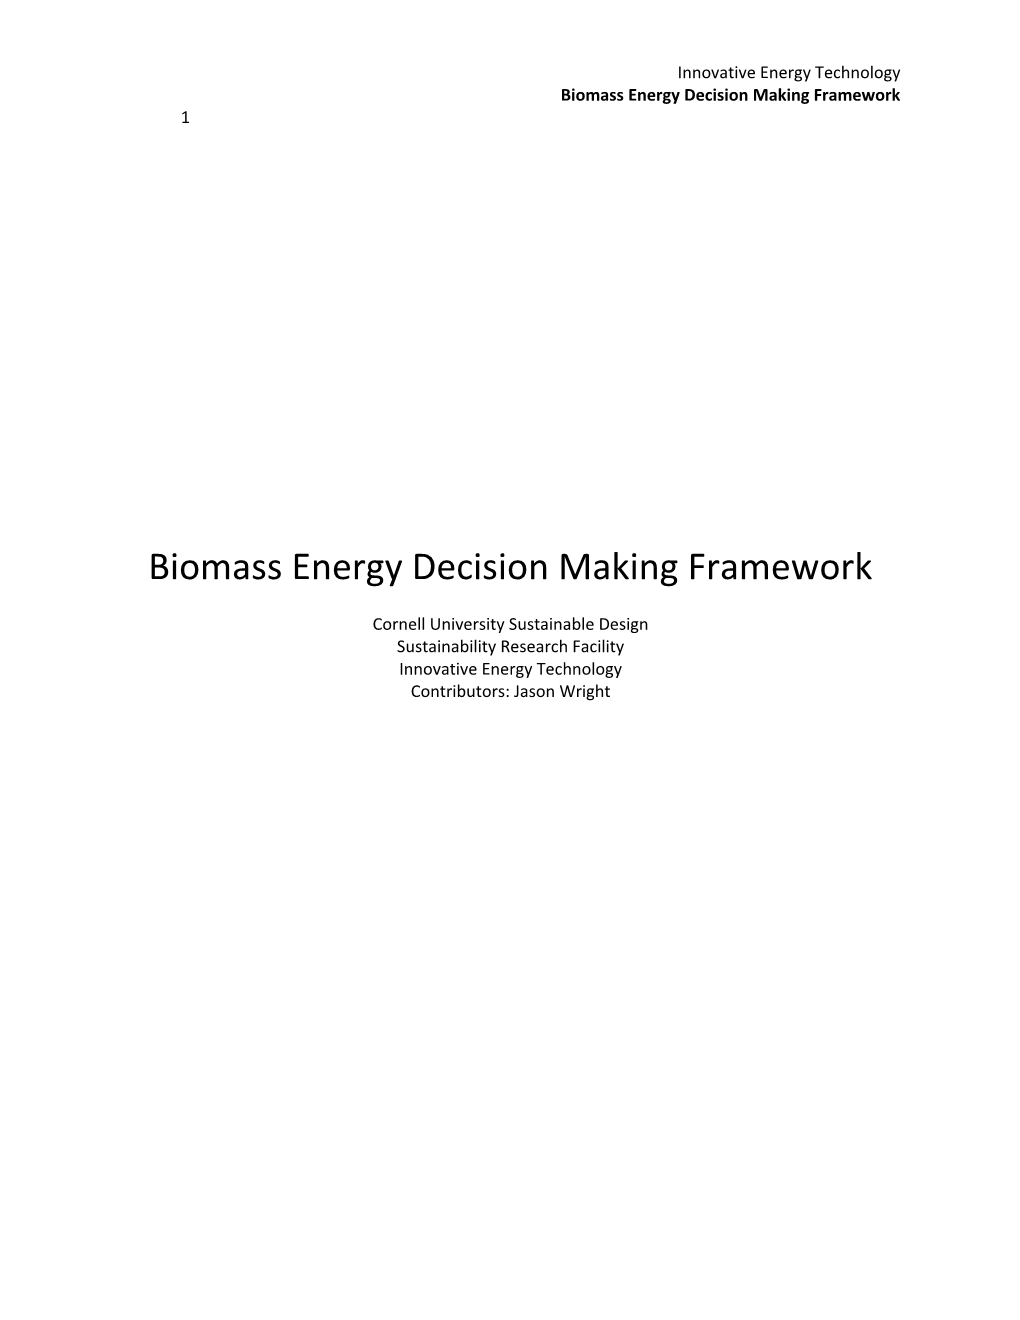 Biomass Energy Decision Making Framework